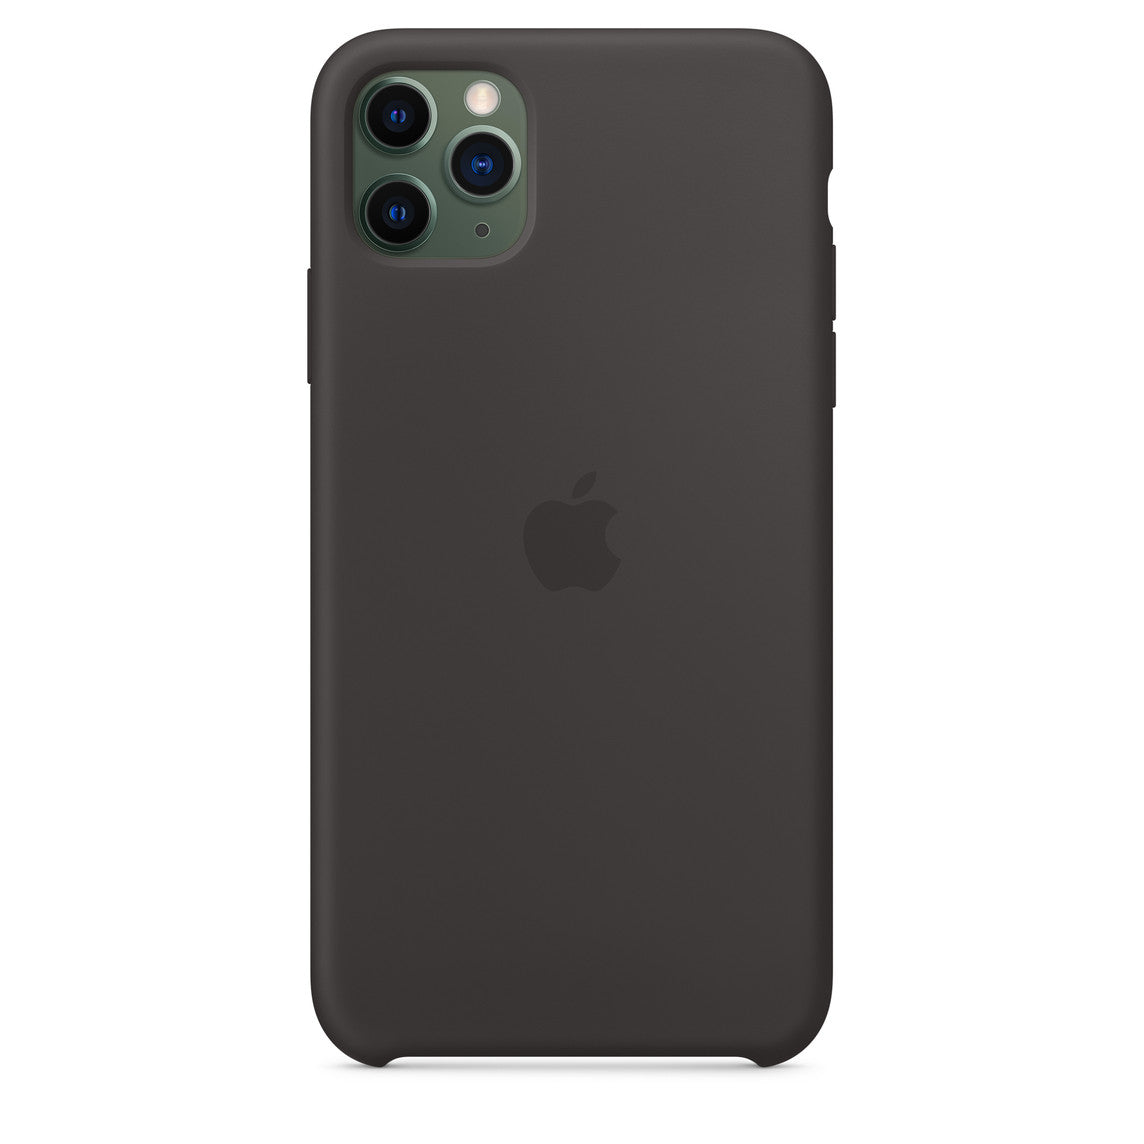 Apple iPhone 11 Pro Max 64GB Nachtgrün Sehr Gut Ohne Vertrag mit Apple iPhone 11 Pro Max Silikonhülle – Schwarz